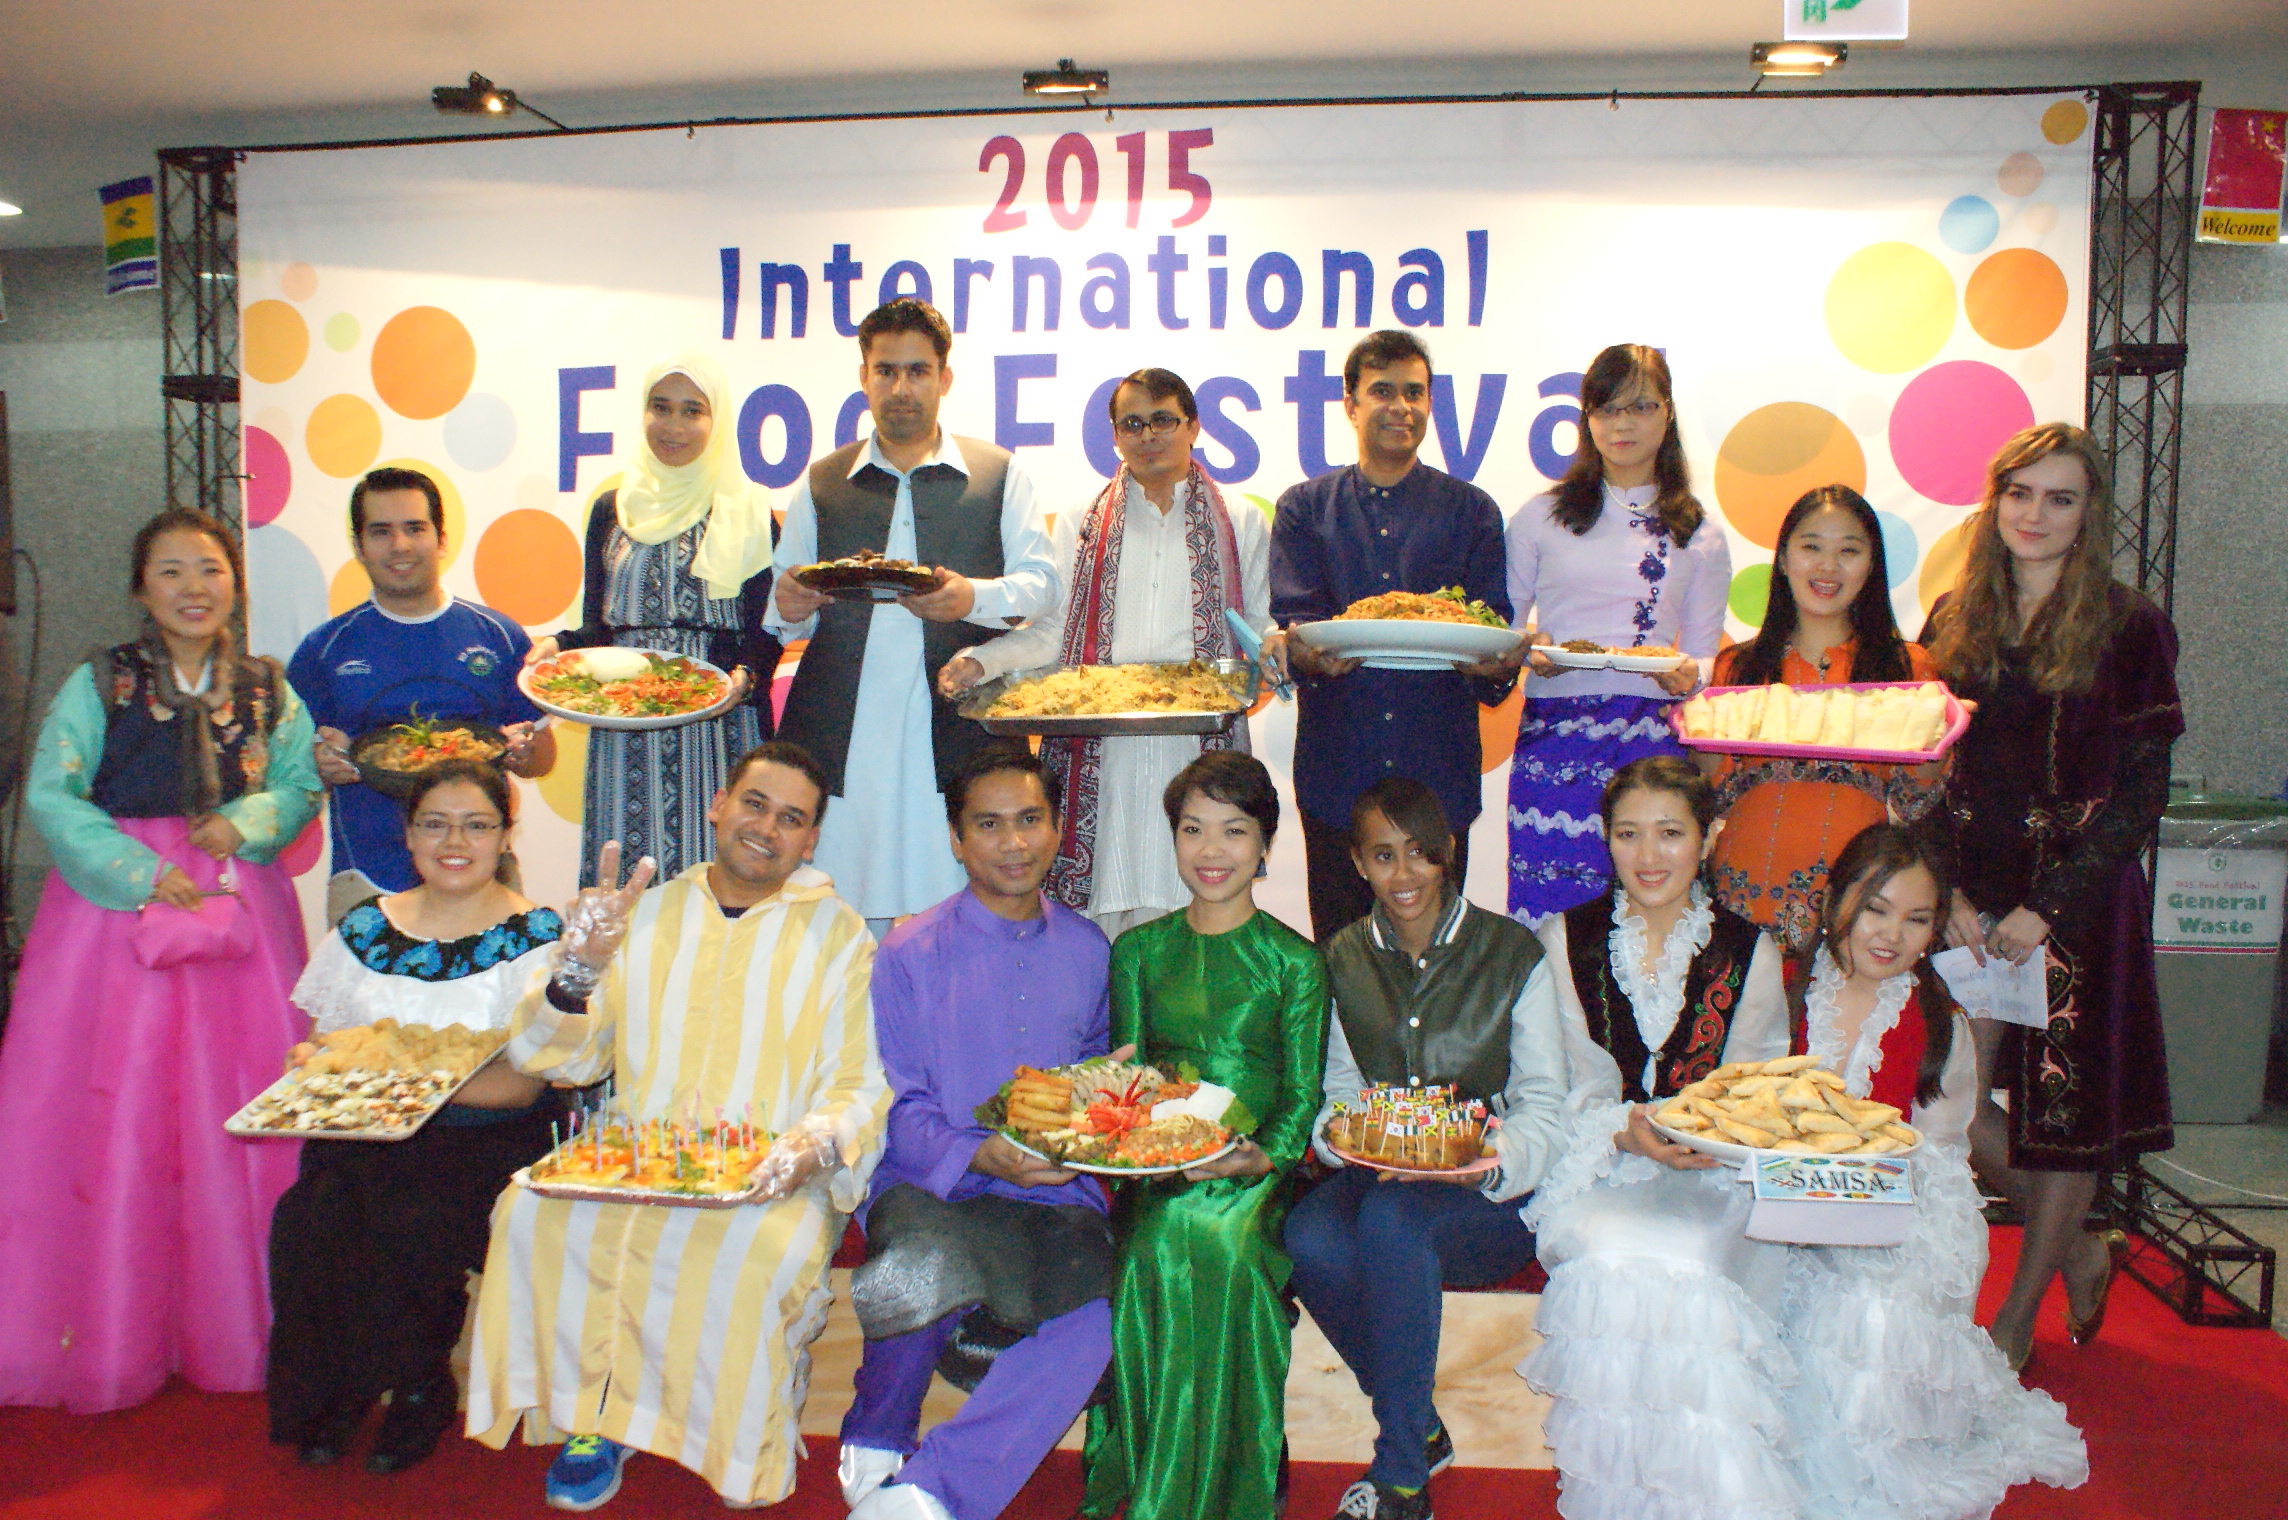 The 2015 International Food Festival : taste the world